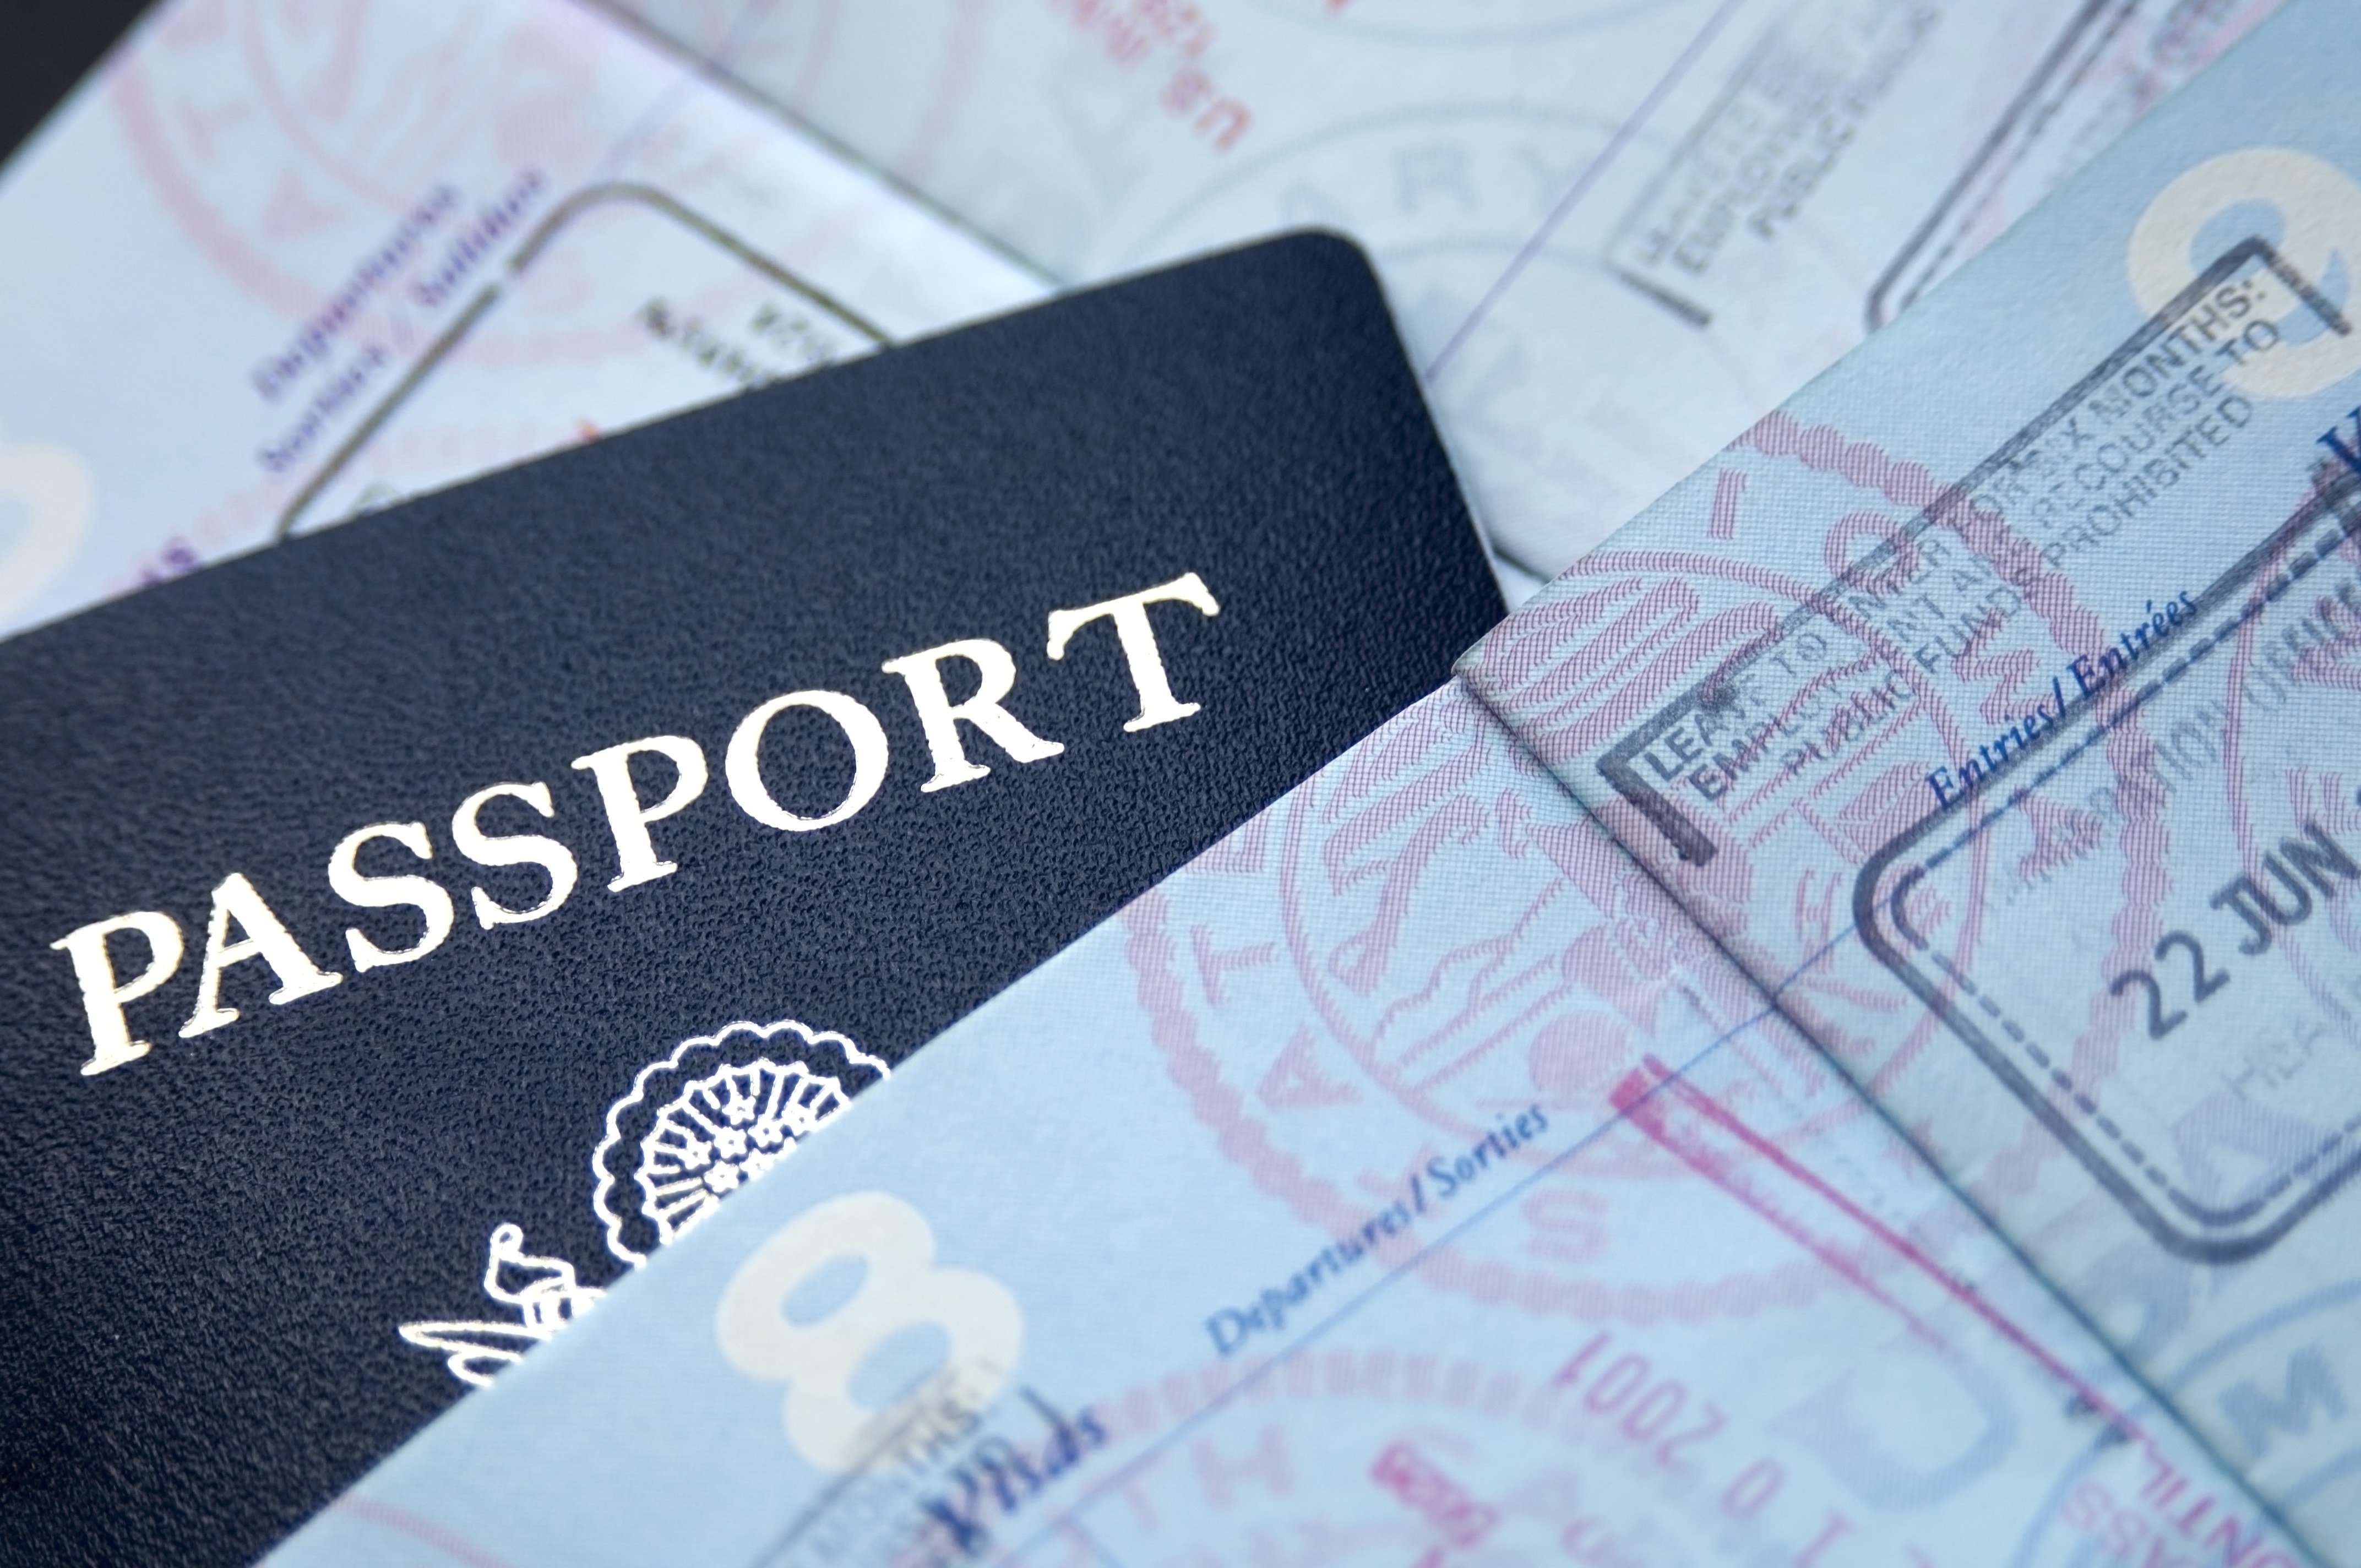 us passport gettyimages 139988188.jpg?resize=412,232 - Tirar passaporte ficará bem mais fácil